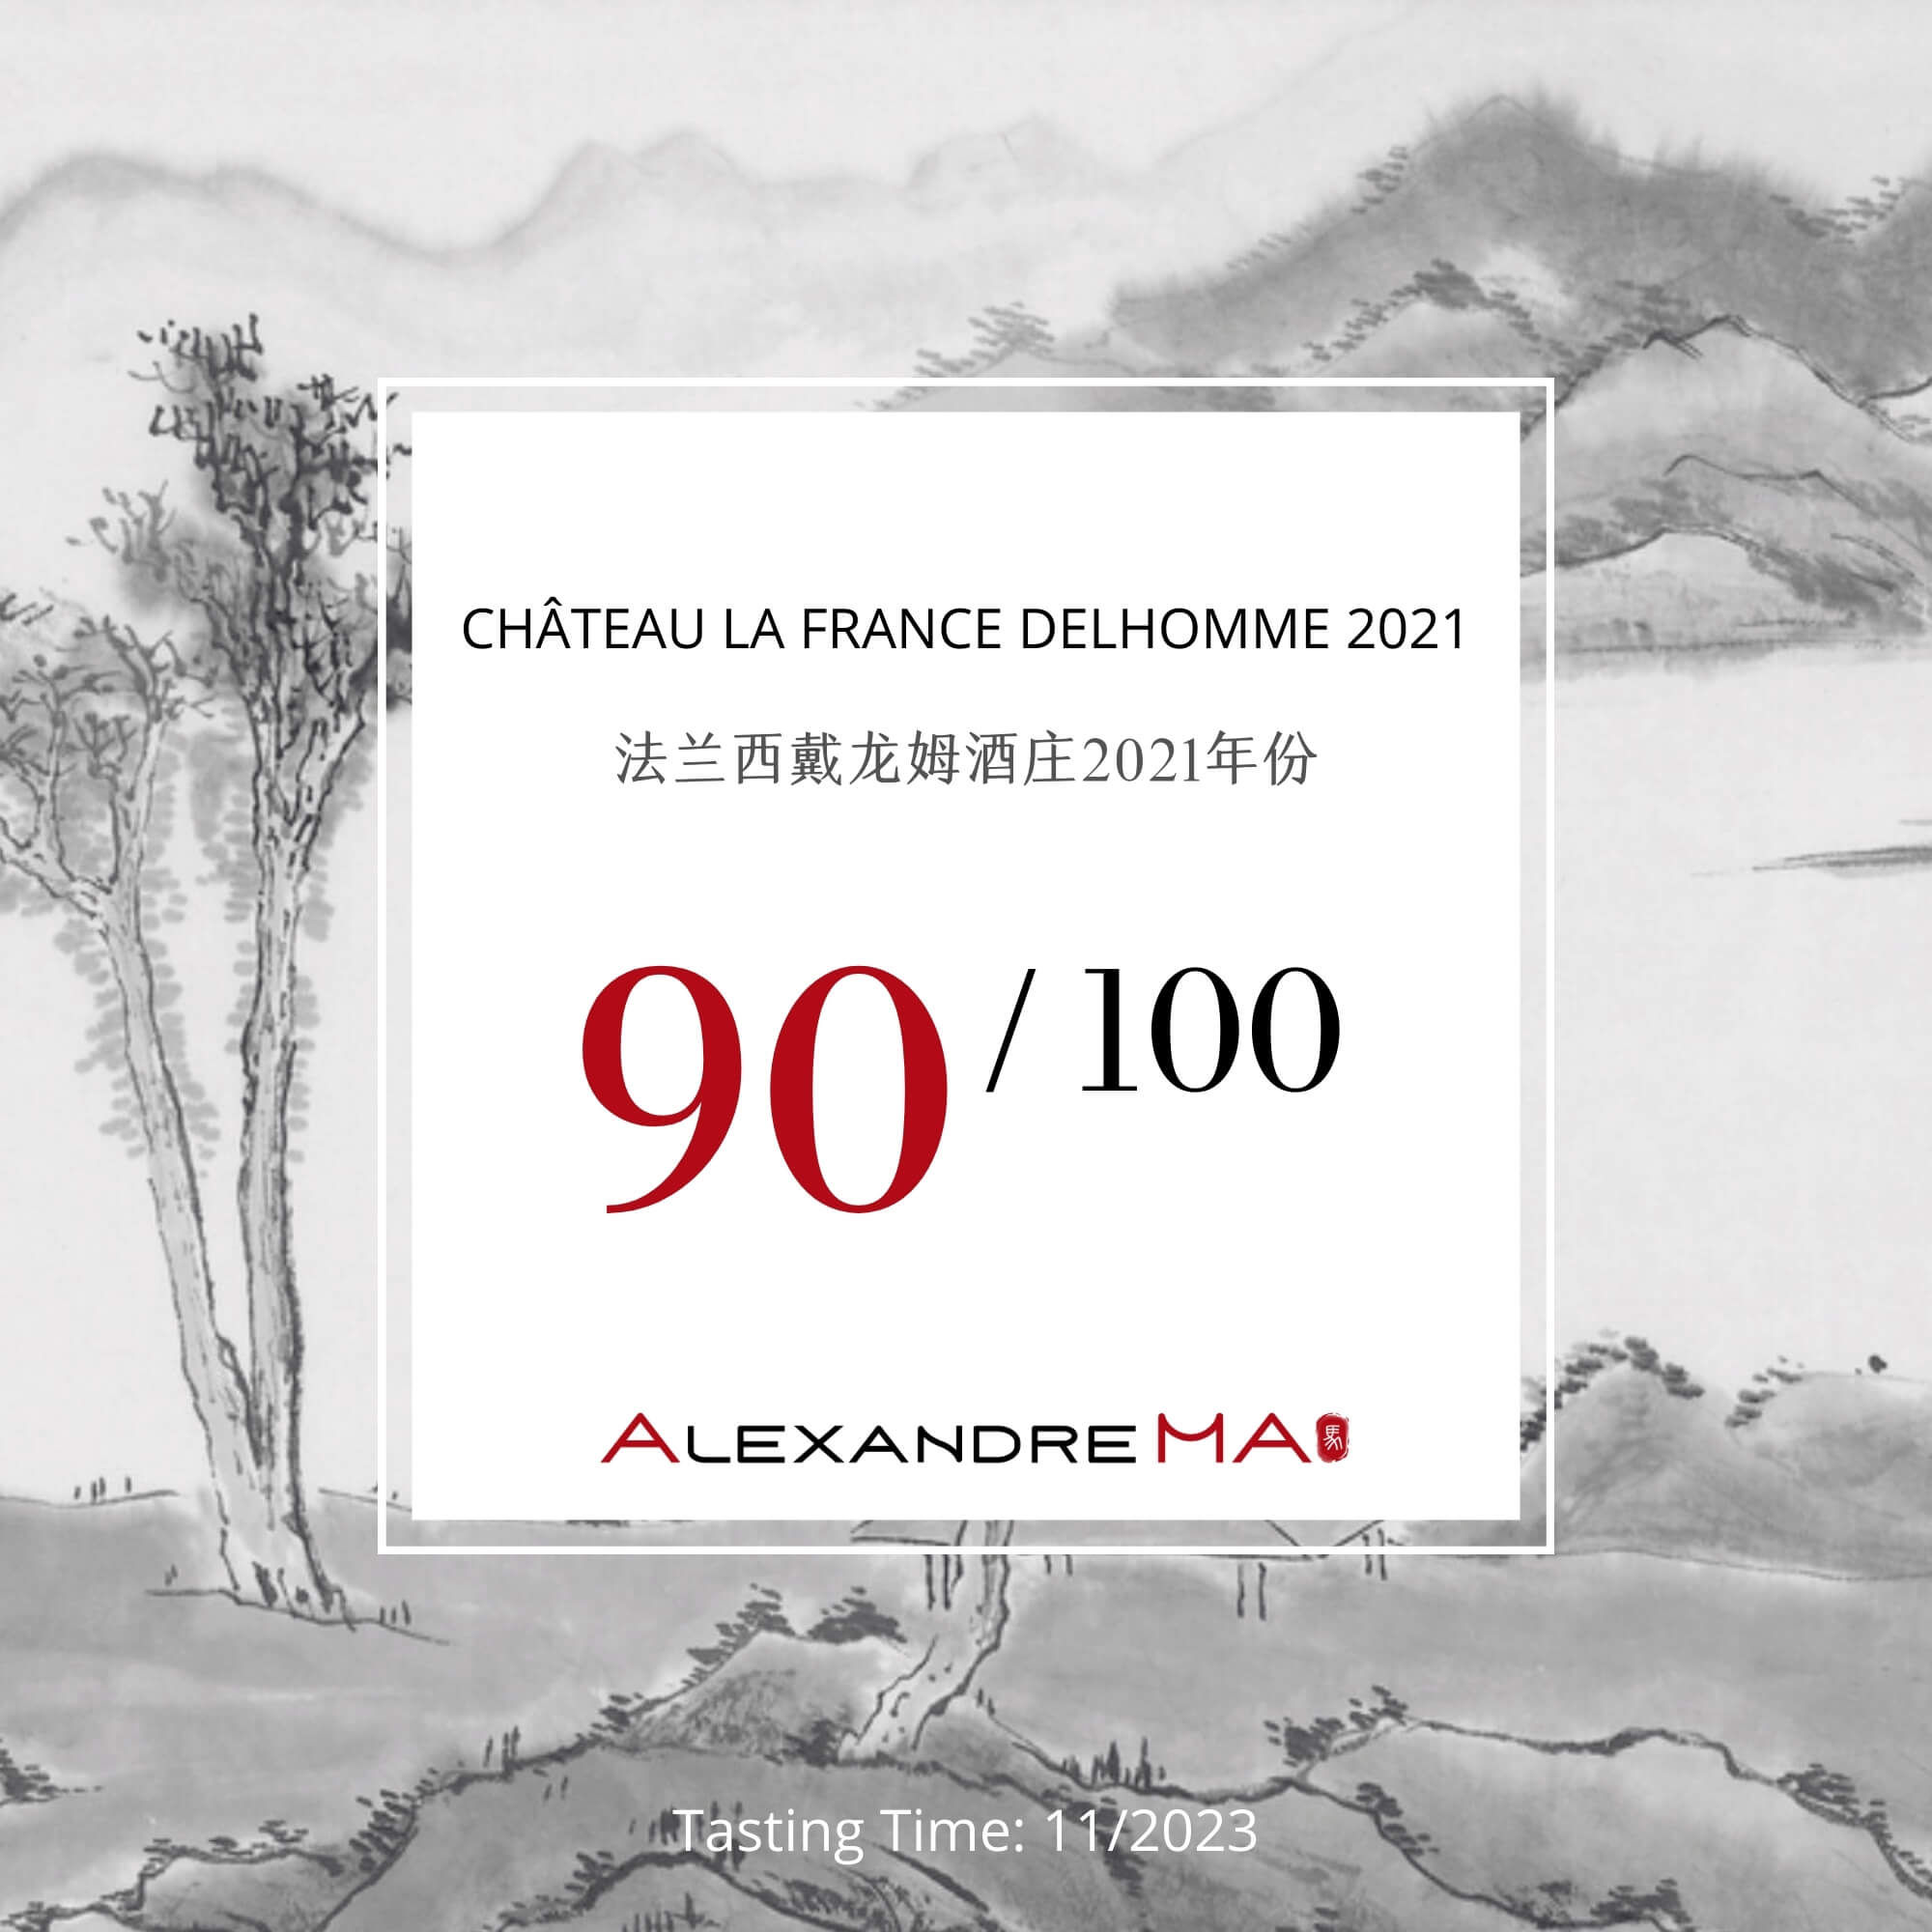 Château La France Delhomme 2021 - Alexandre MA